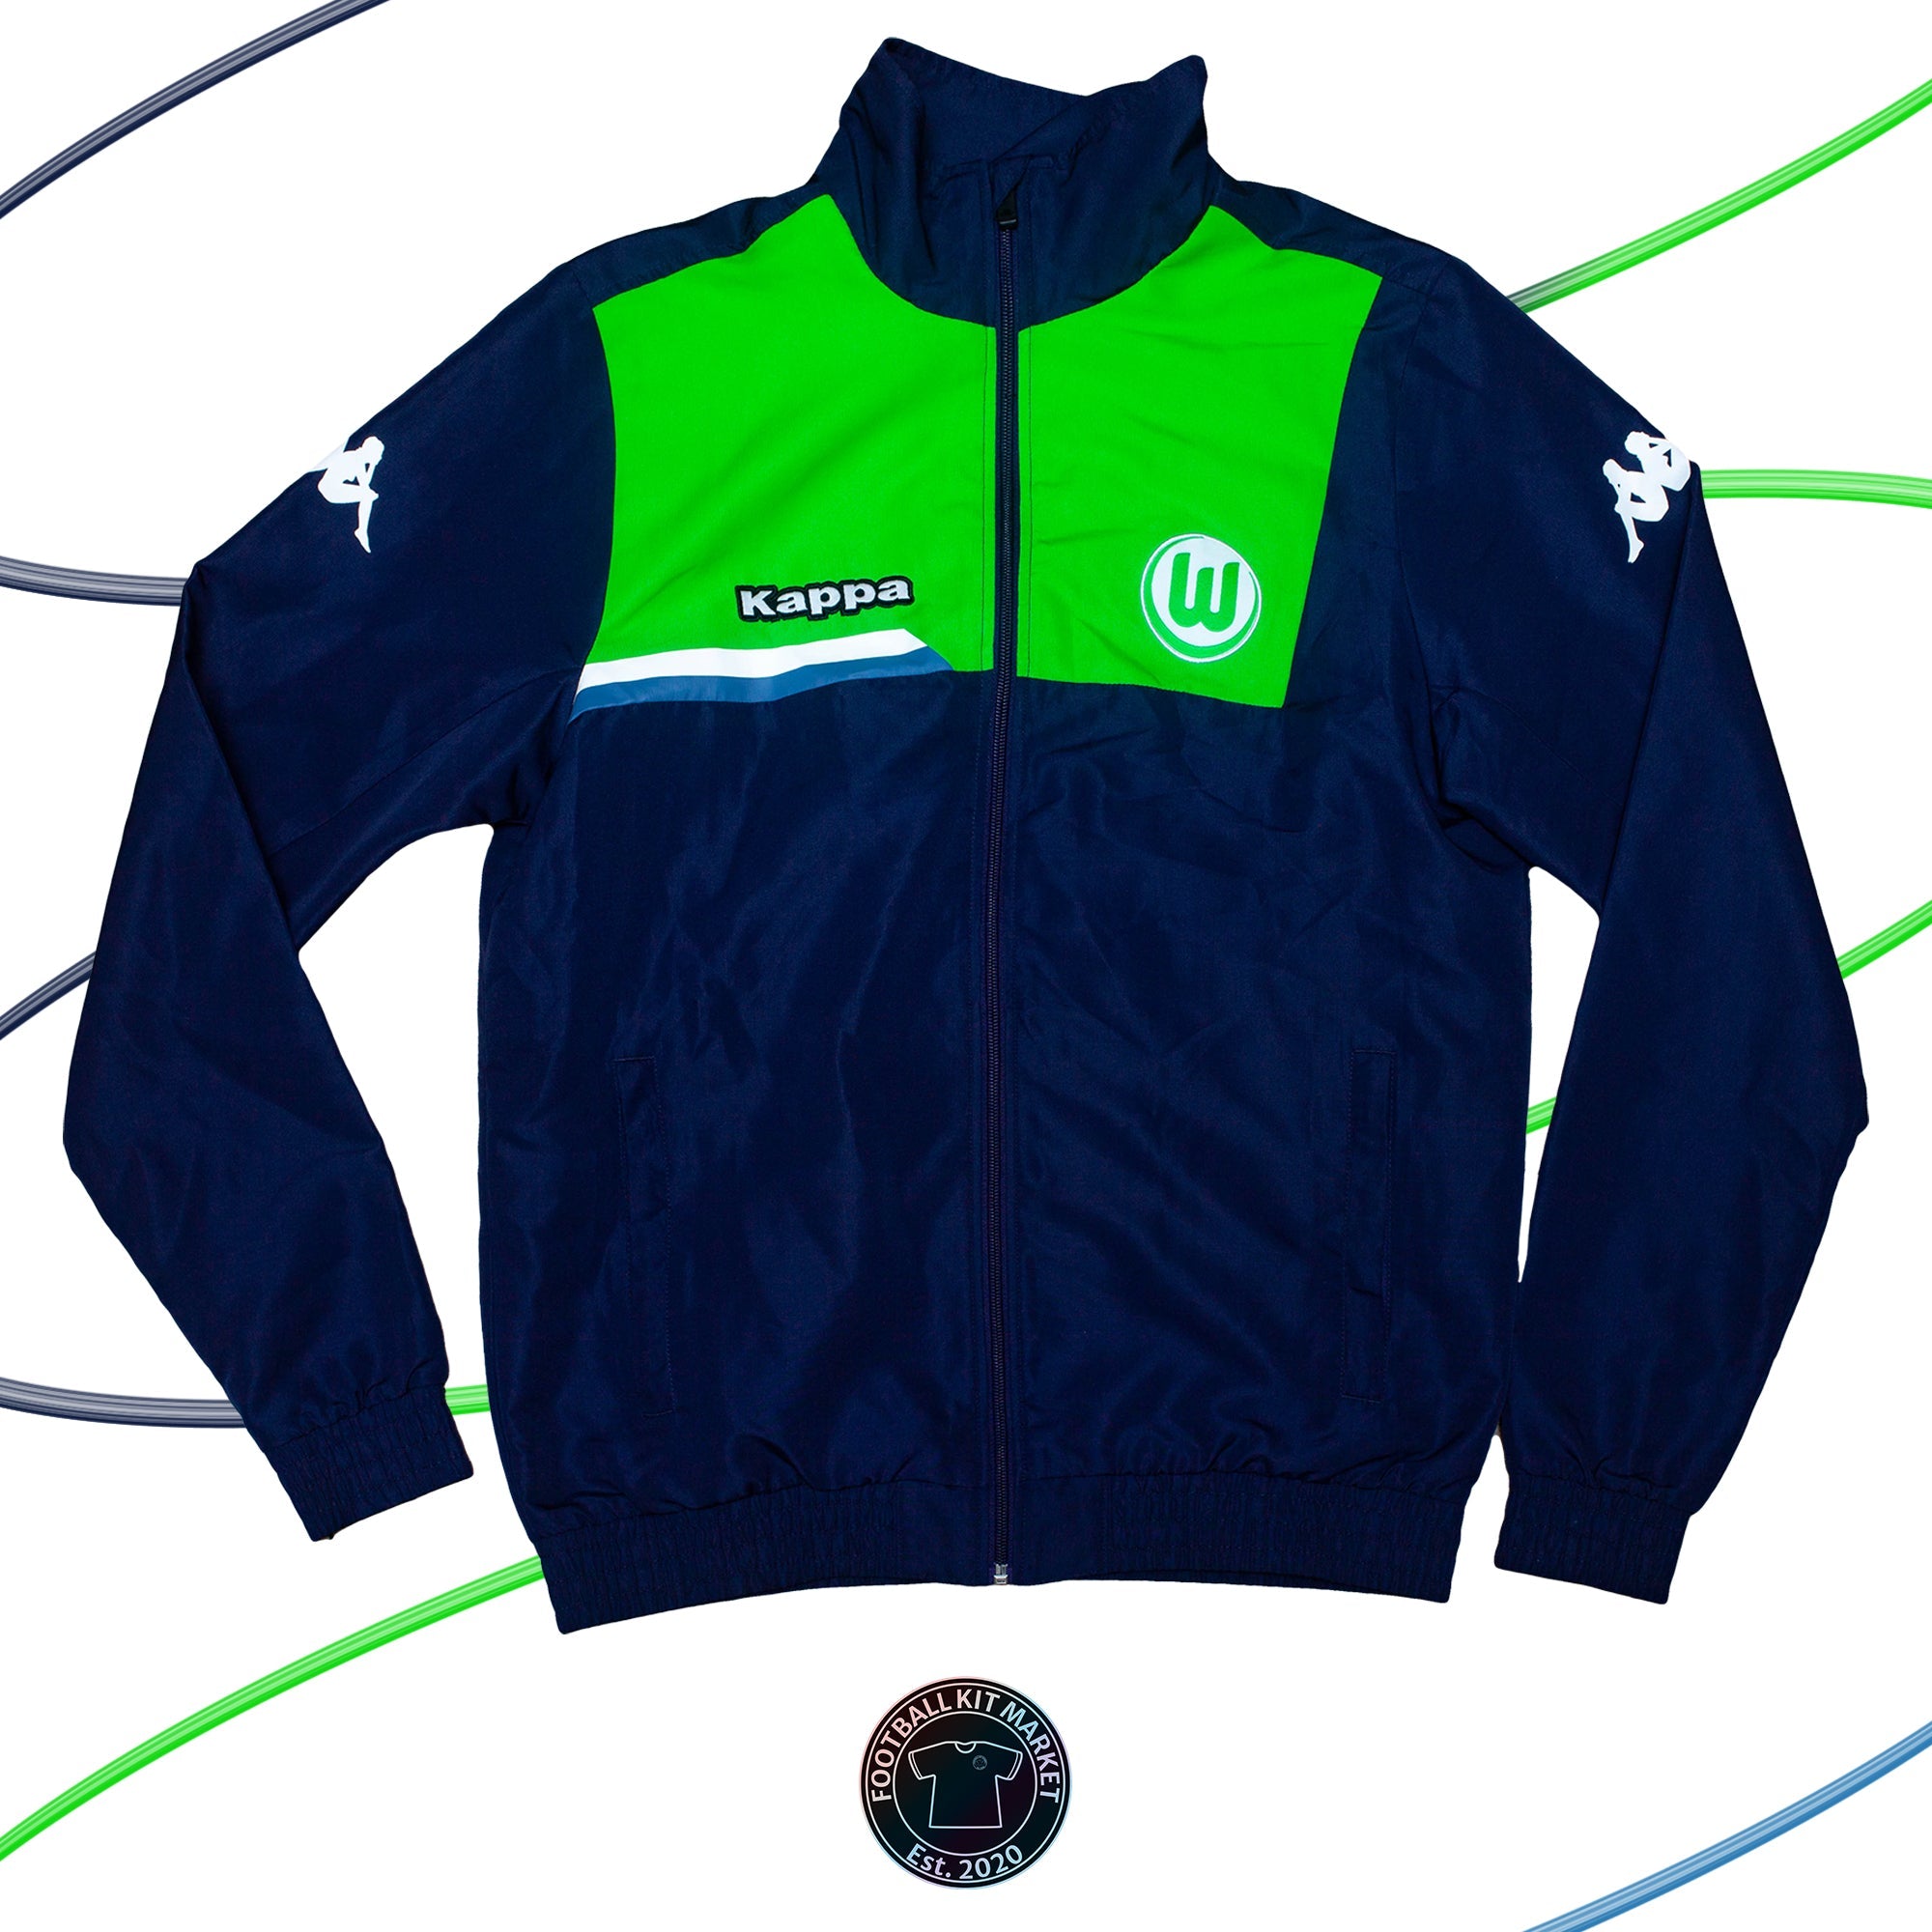 Genuine WOLFSBURG Jacket (2015-2016) - KAPPA (M) - Product Image from Football Kit Market